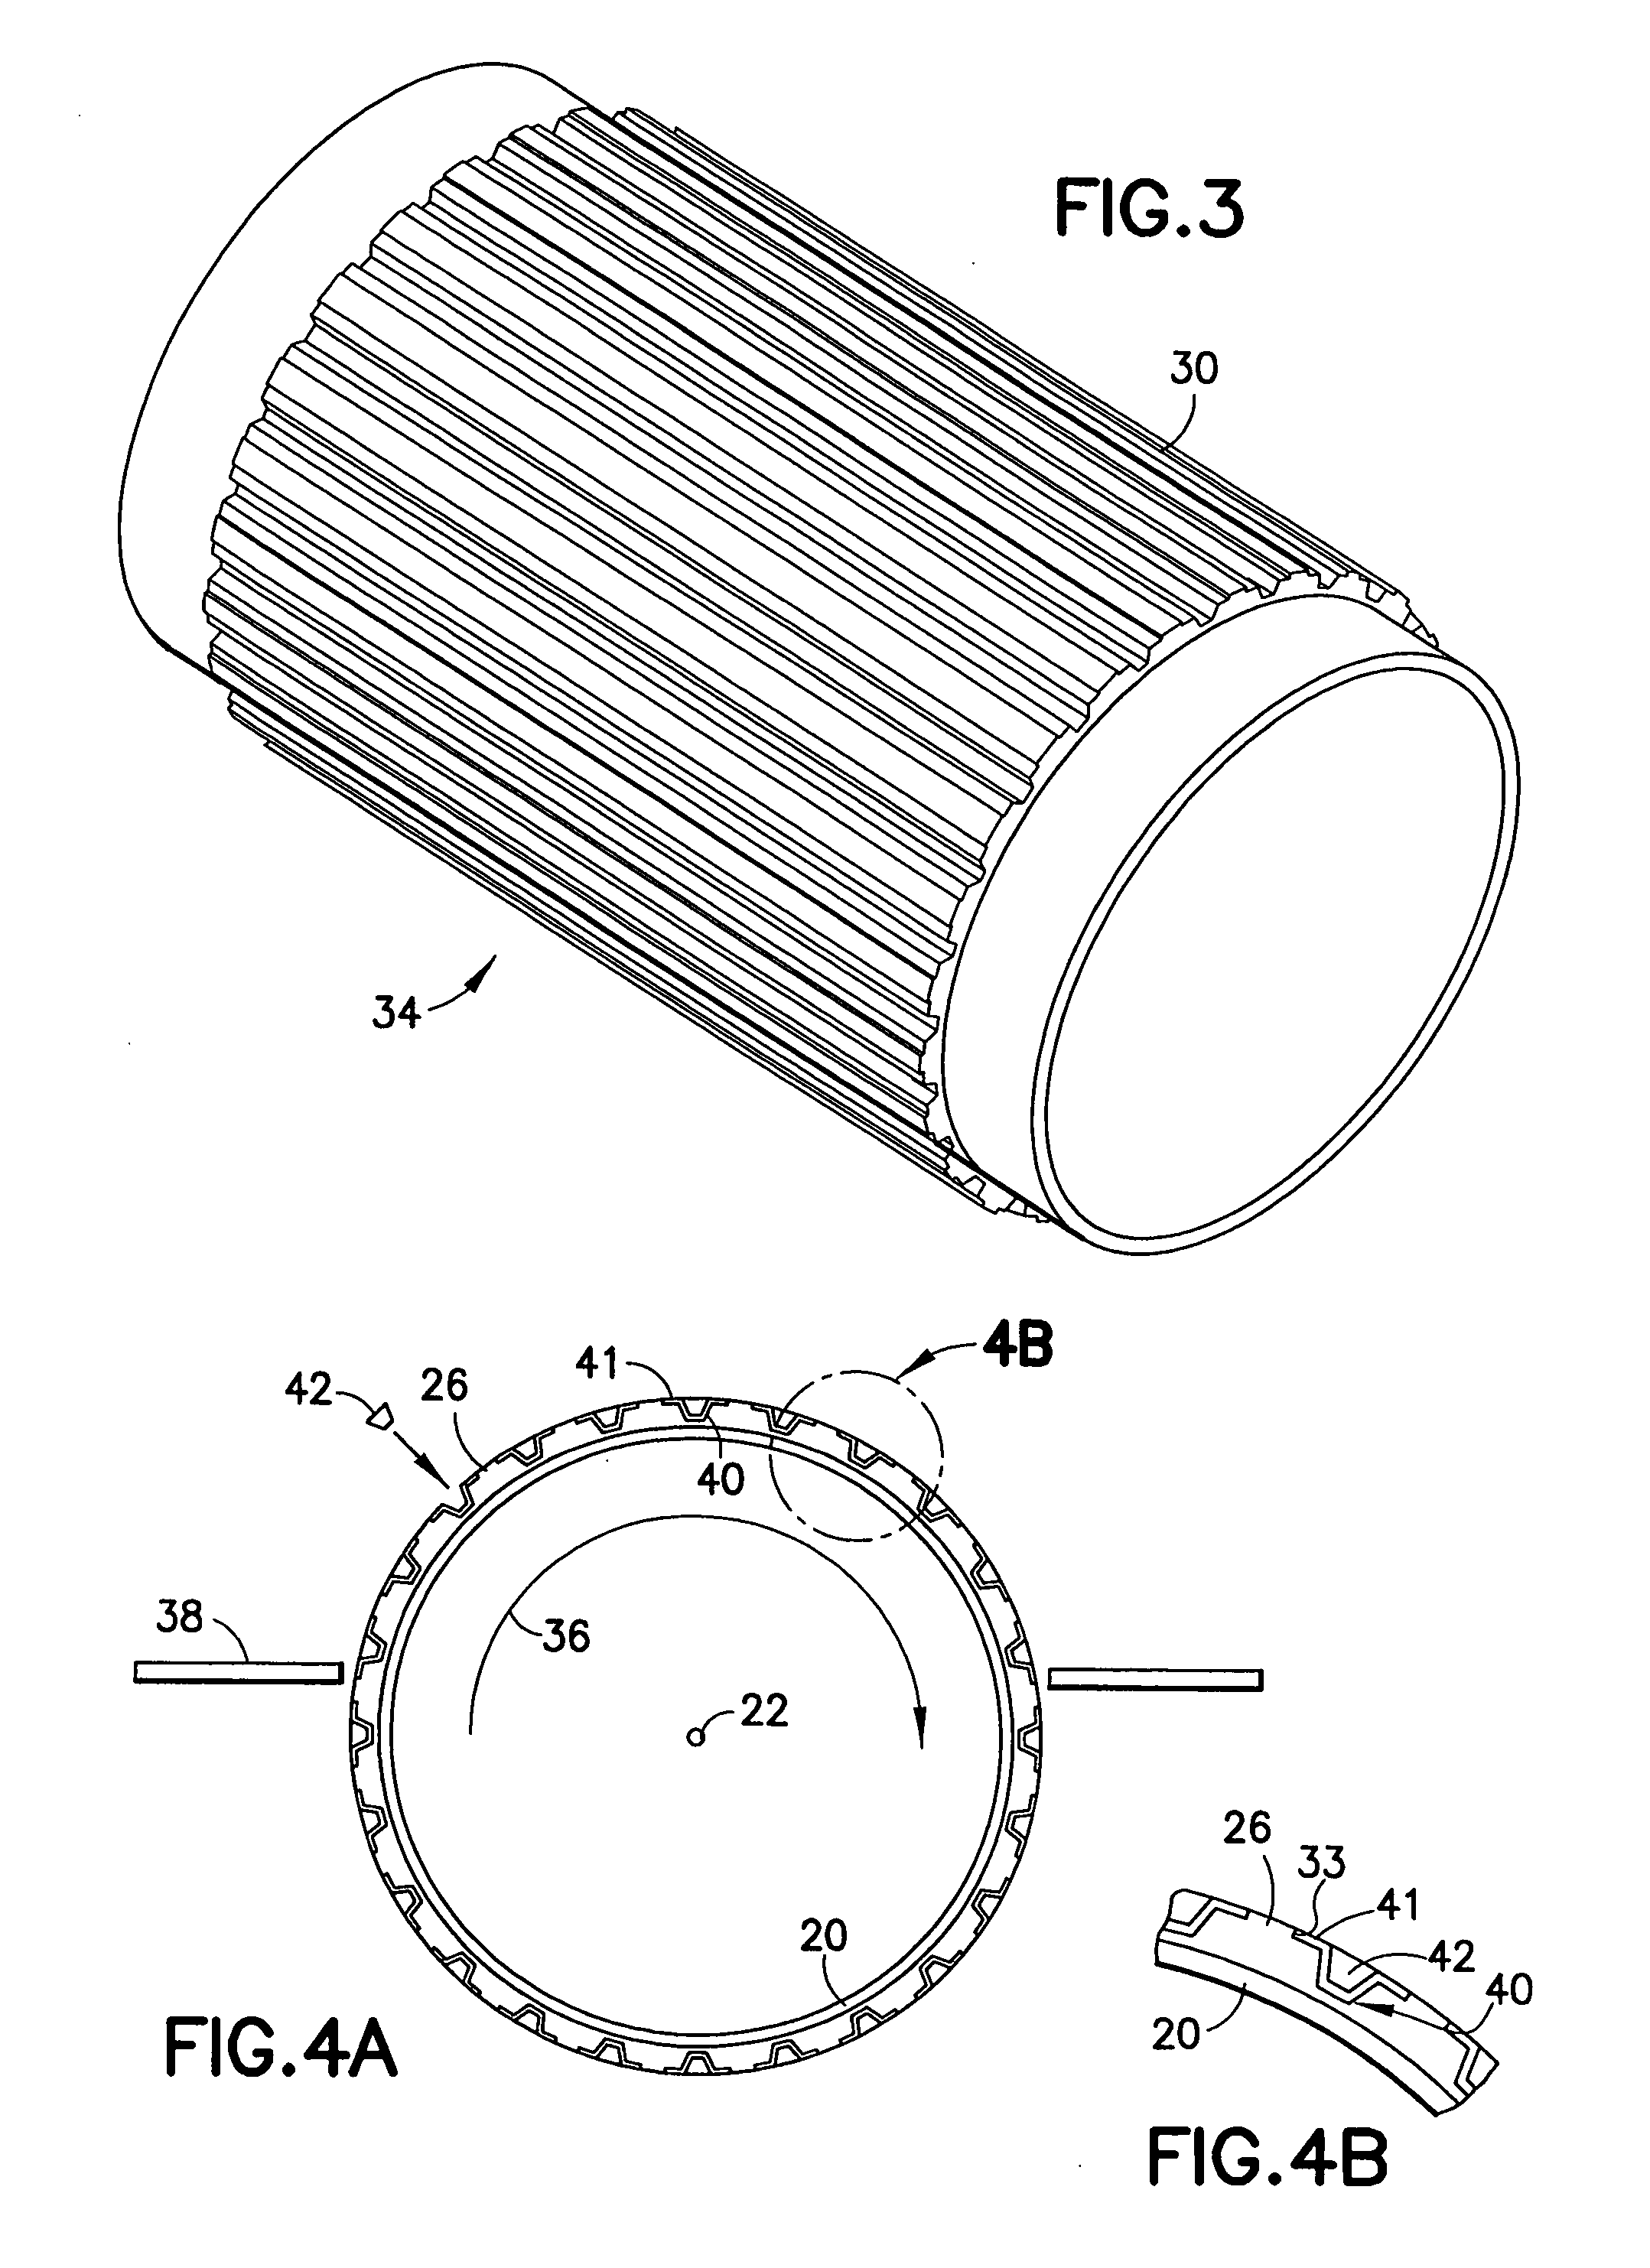 One-piece inner shell for full barrel composite fuselage